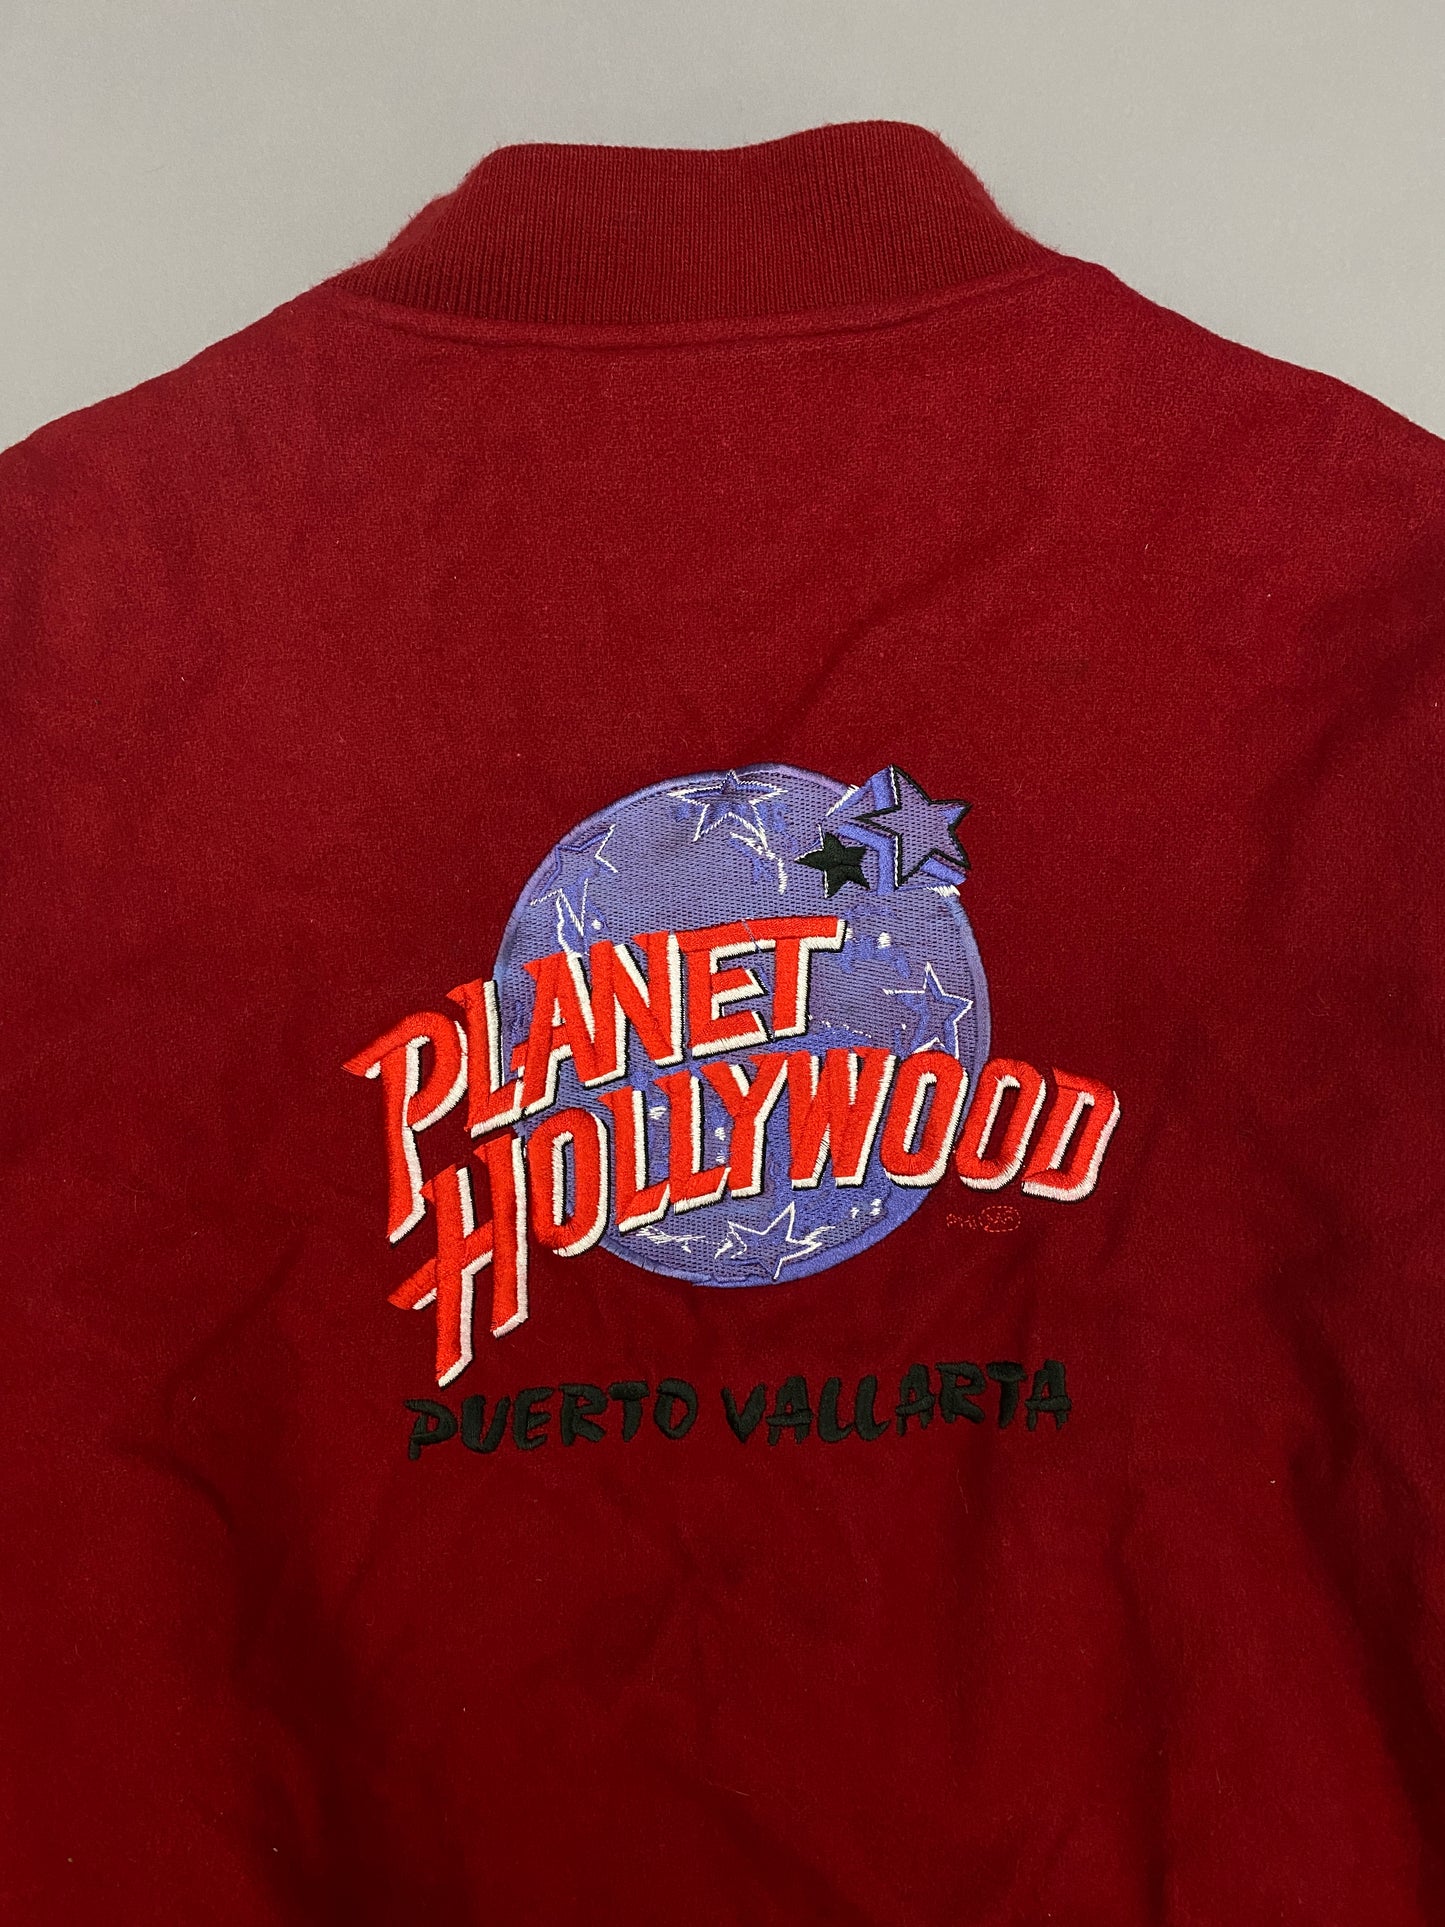 Bomber Planet Hollywood Vintage